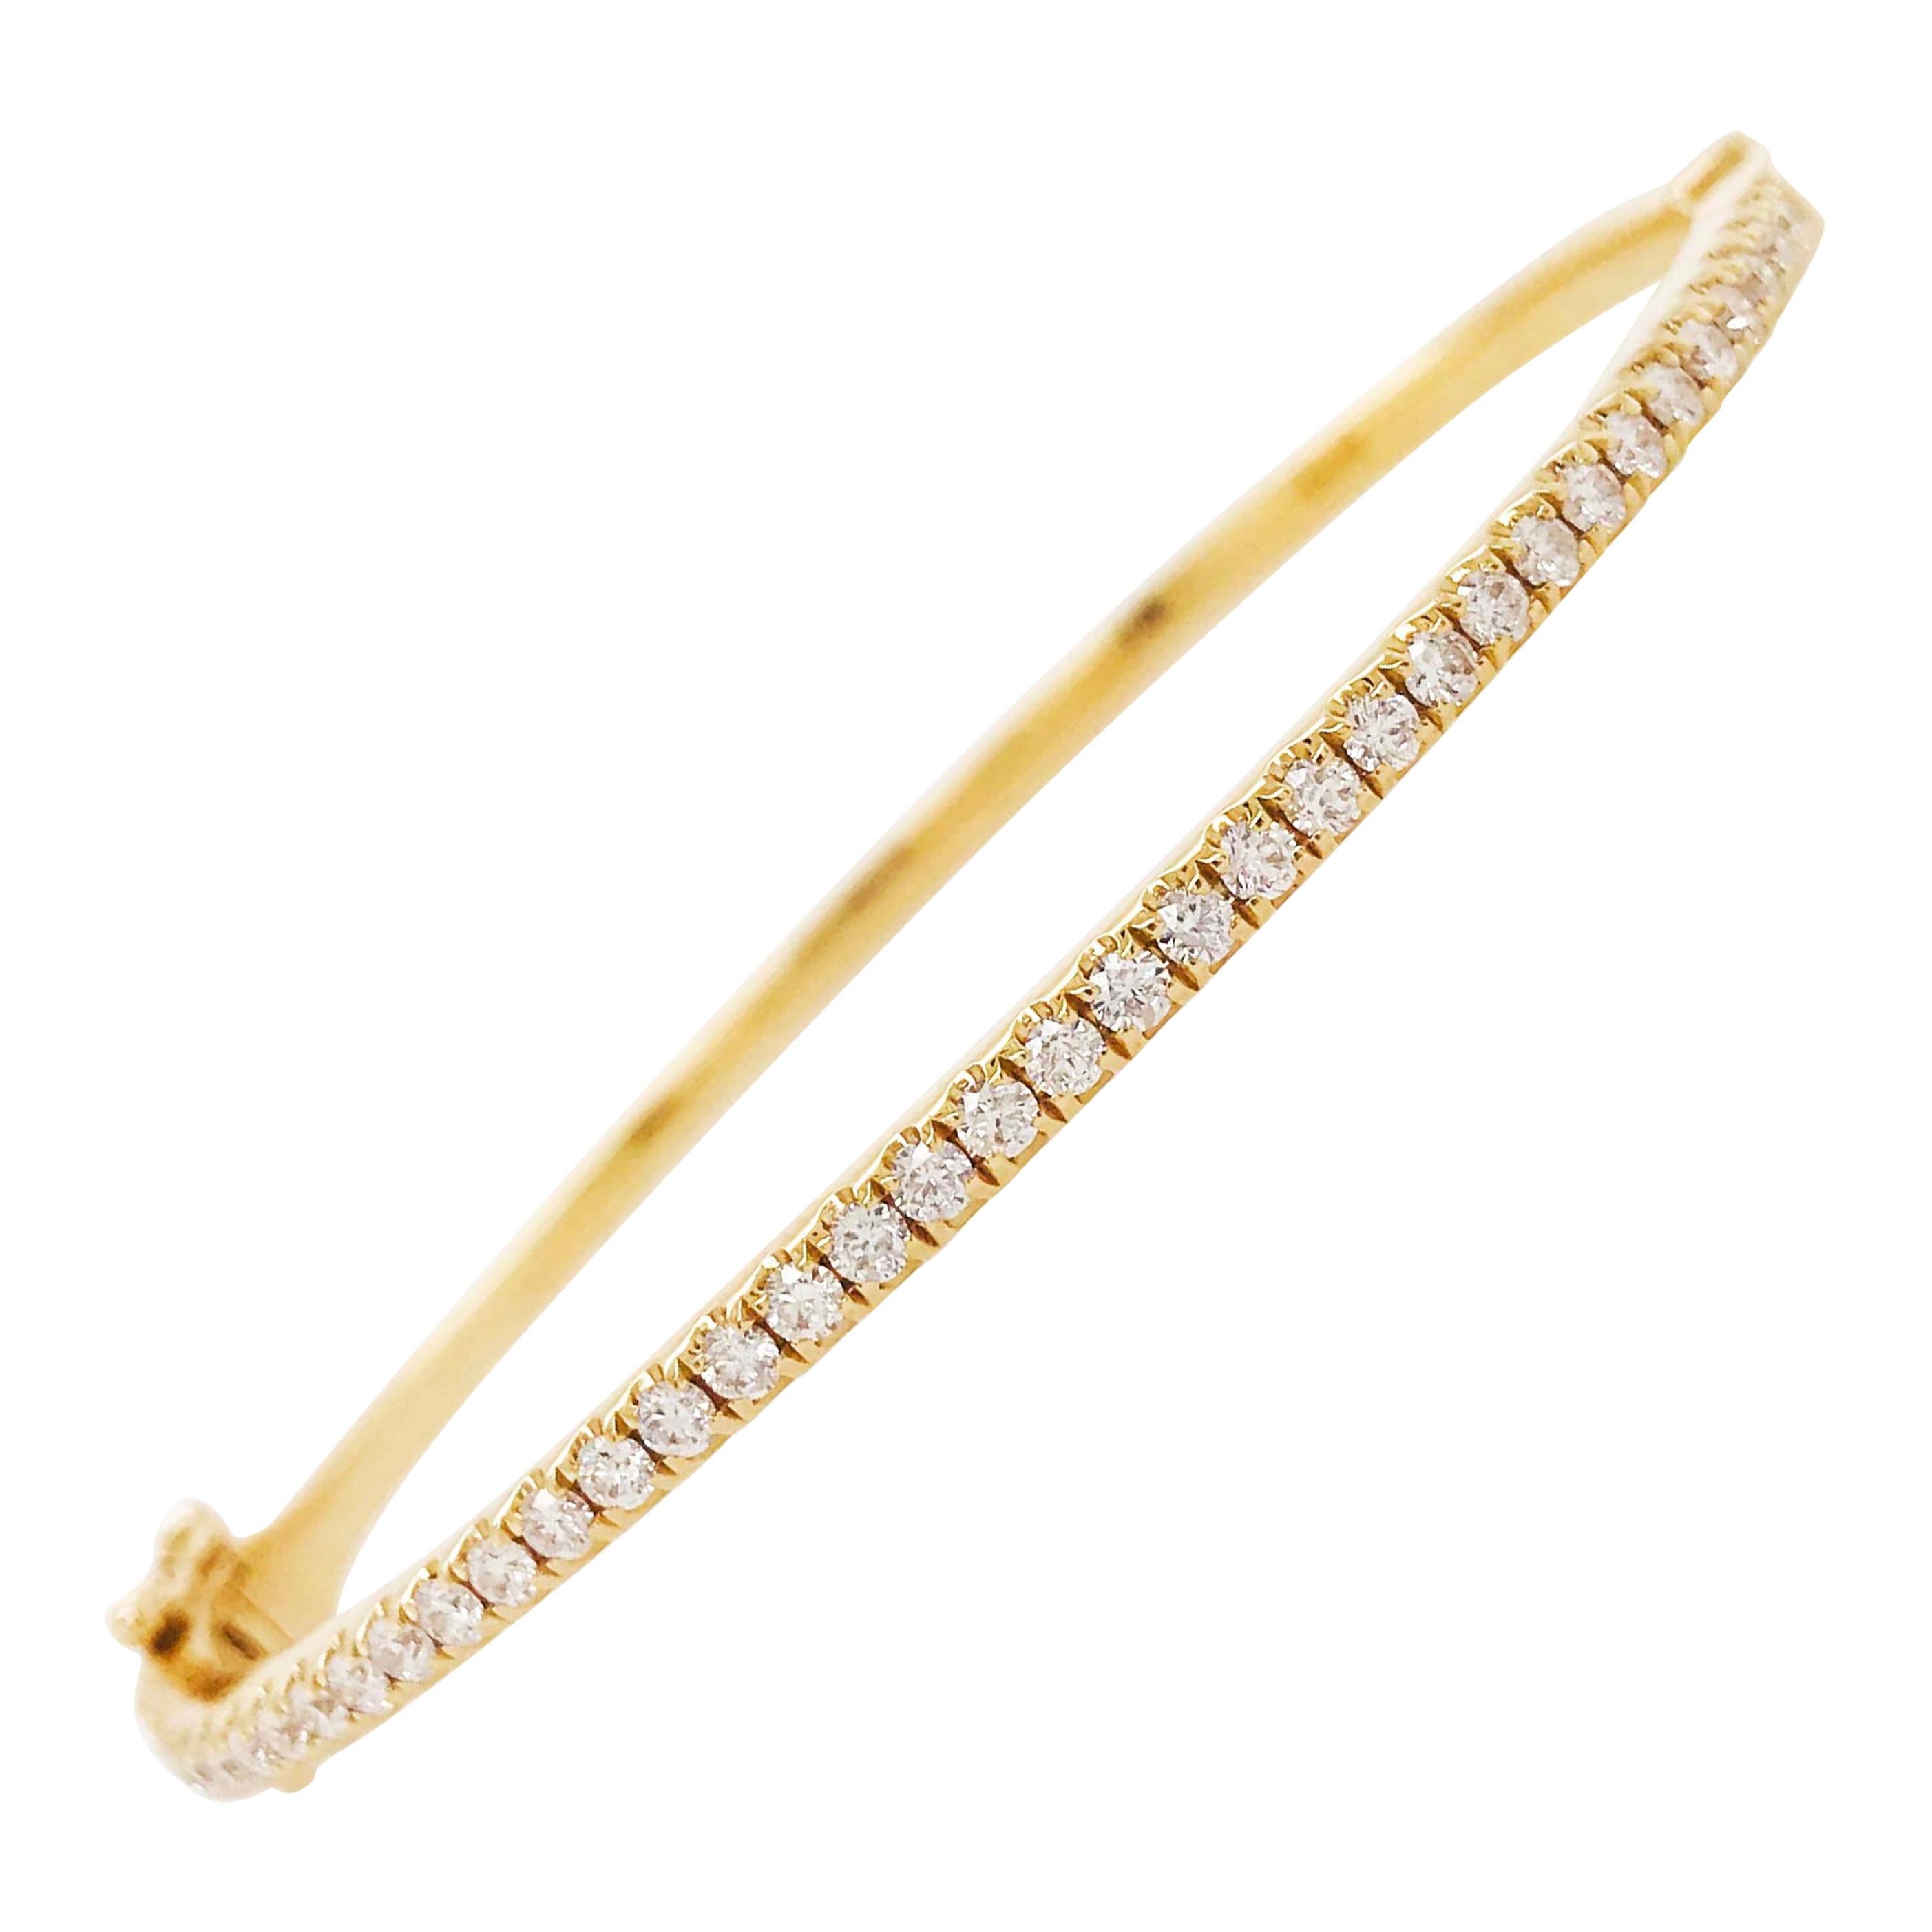 Bracelet tennis en or jaune massif 14 carats avec 1,40 carat de diamants ronds brillants